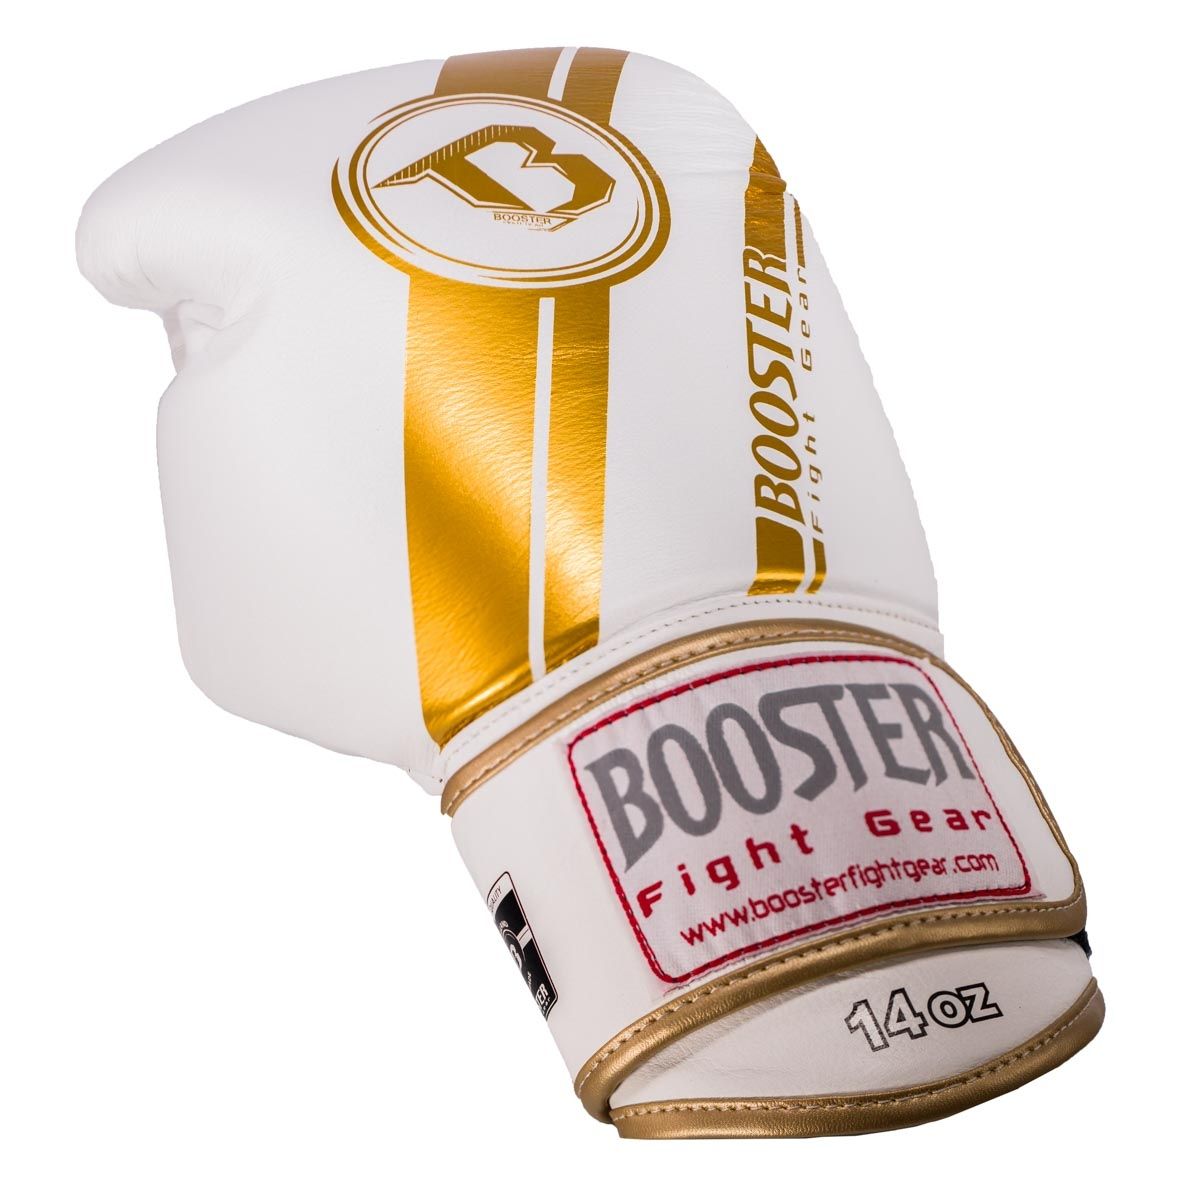 Booster Leather Boxing Gloves BGL 1 V3 WHITE/ GOLD